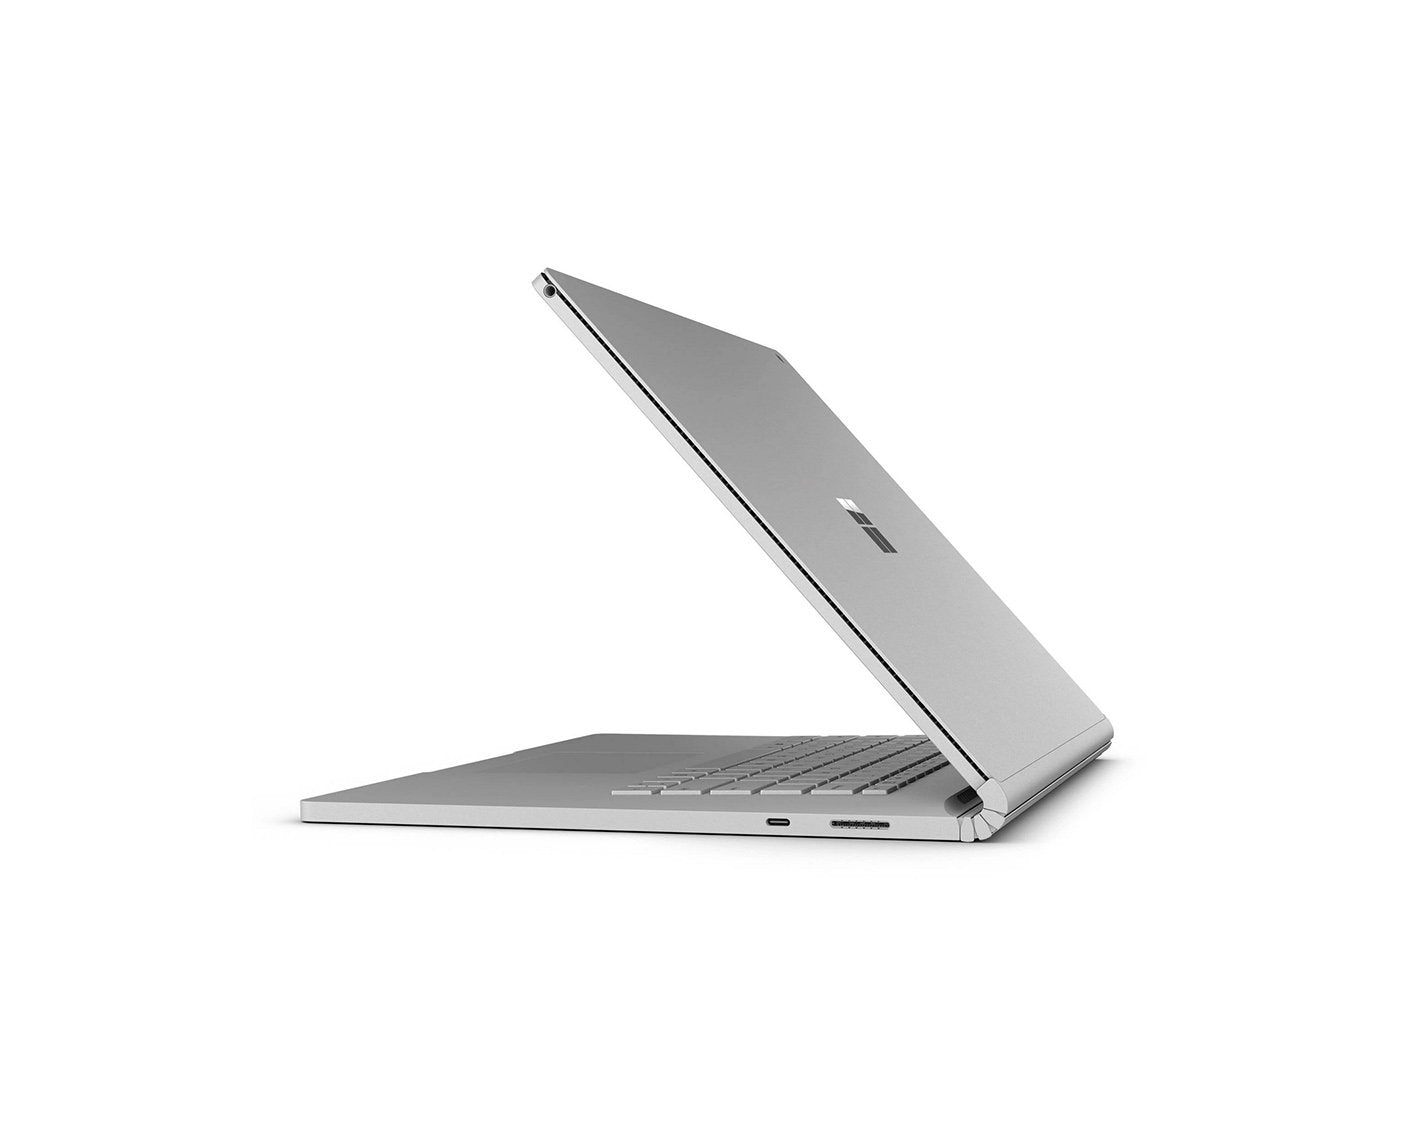 Surface Book | Silver | 256GB SSD | Core i7 | 8GB RAM